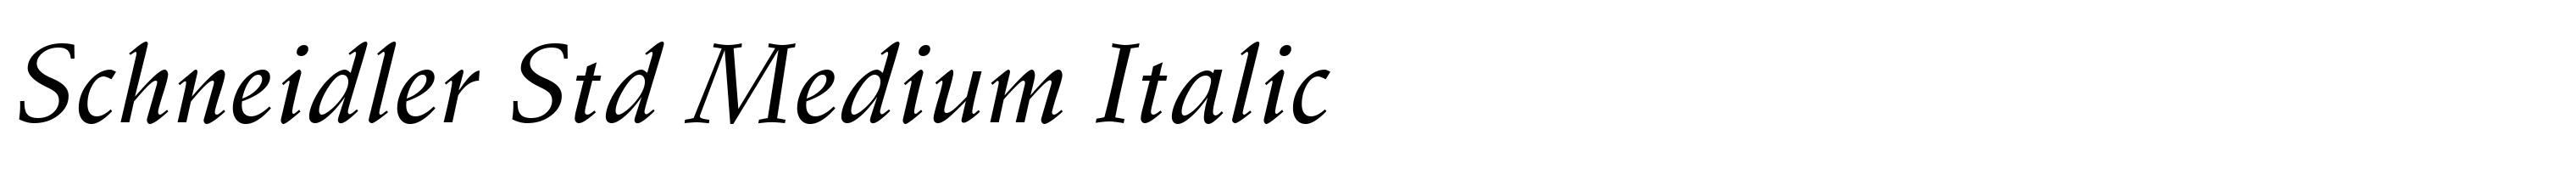 Schneidler Std Medium Italic